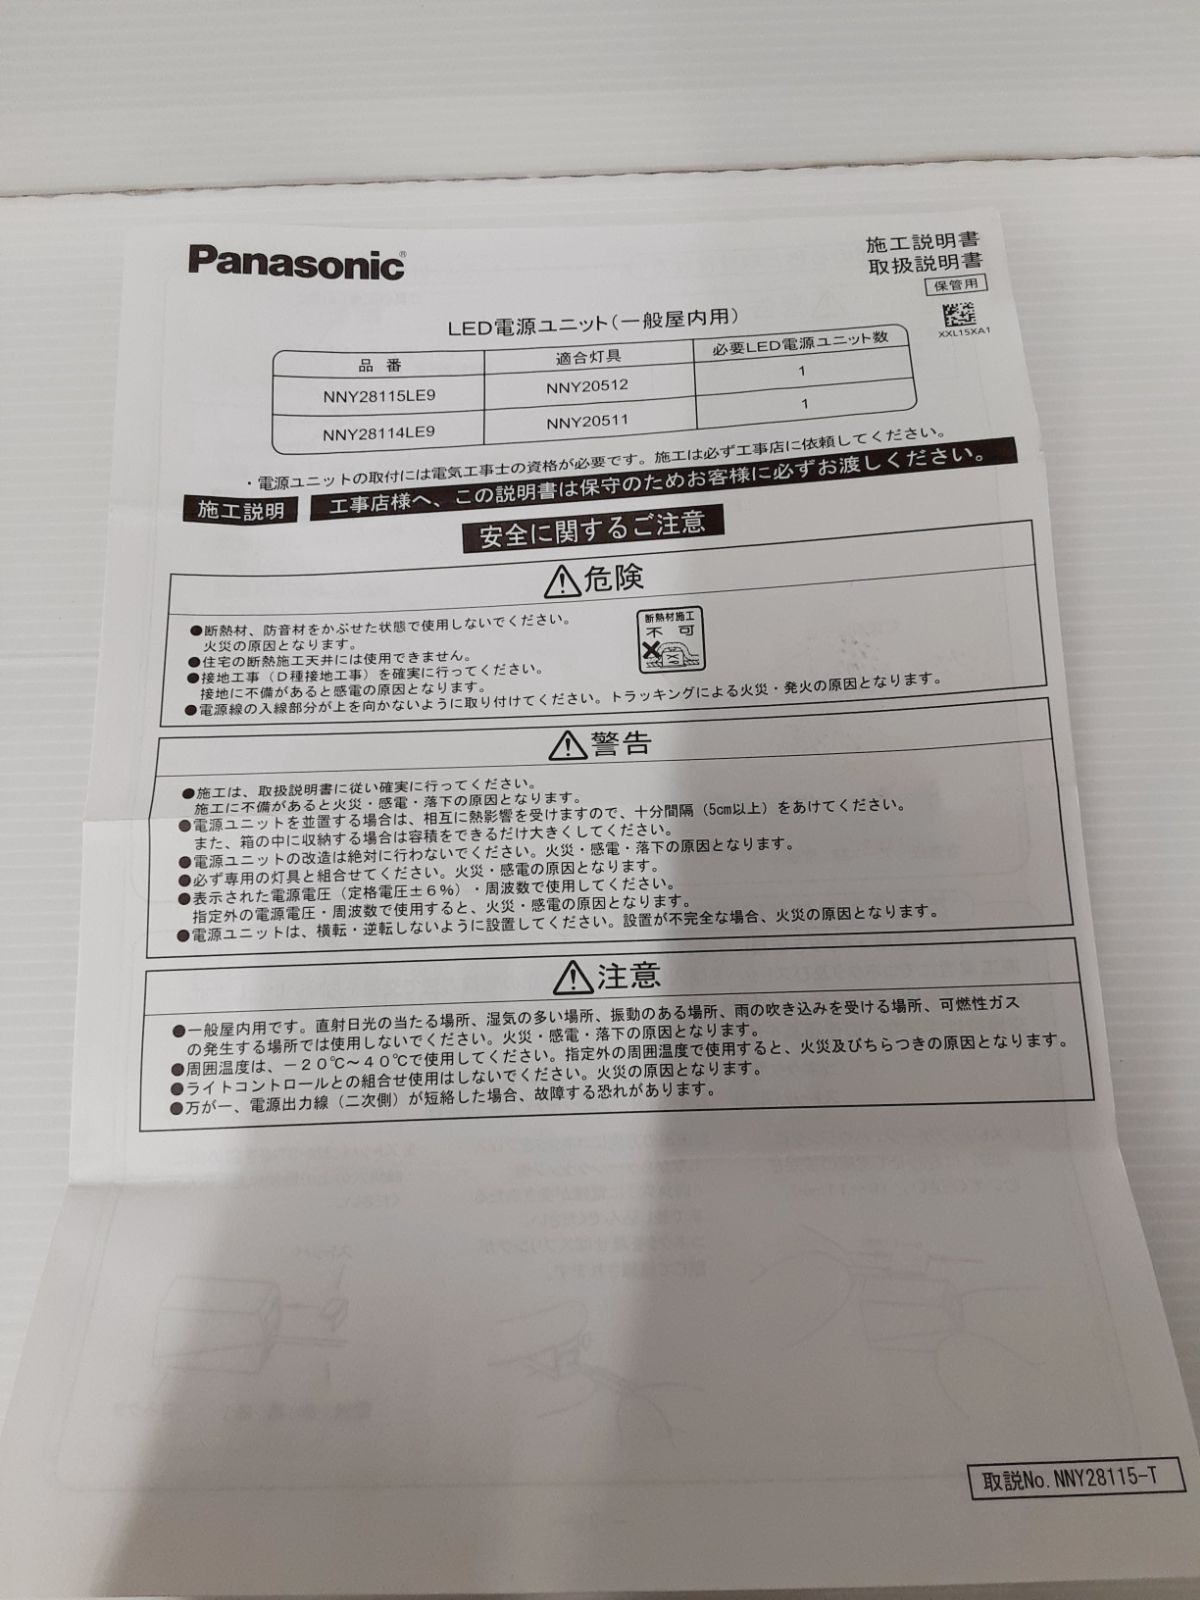 Panasonic NNY28114LE9 LED電源ユニット専用灯具別売 株式会社USTEER メルカリ